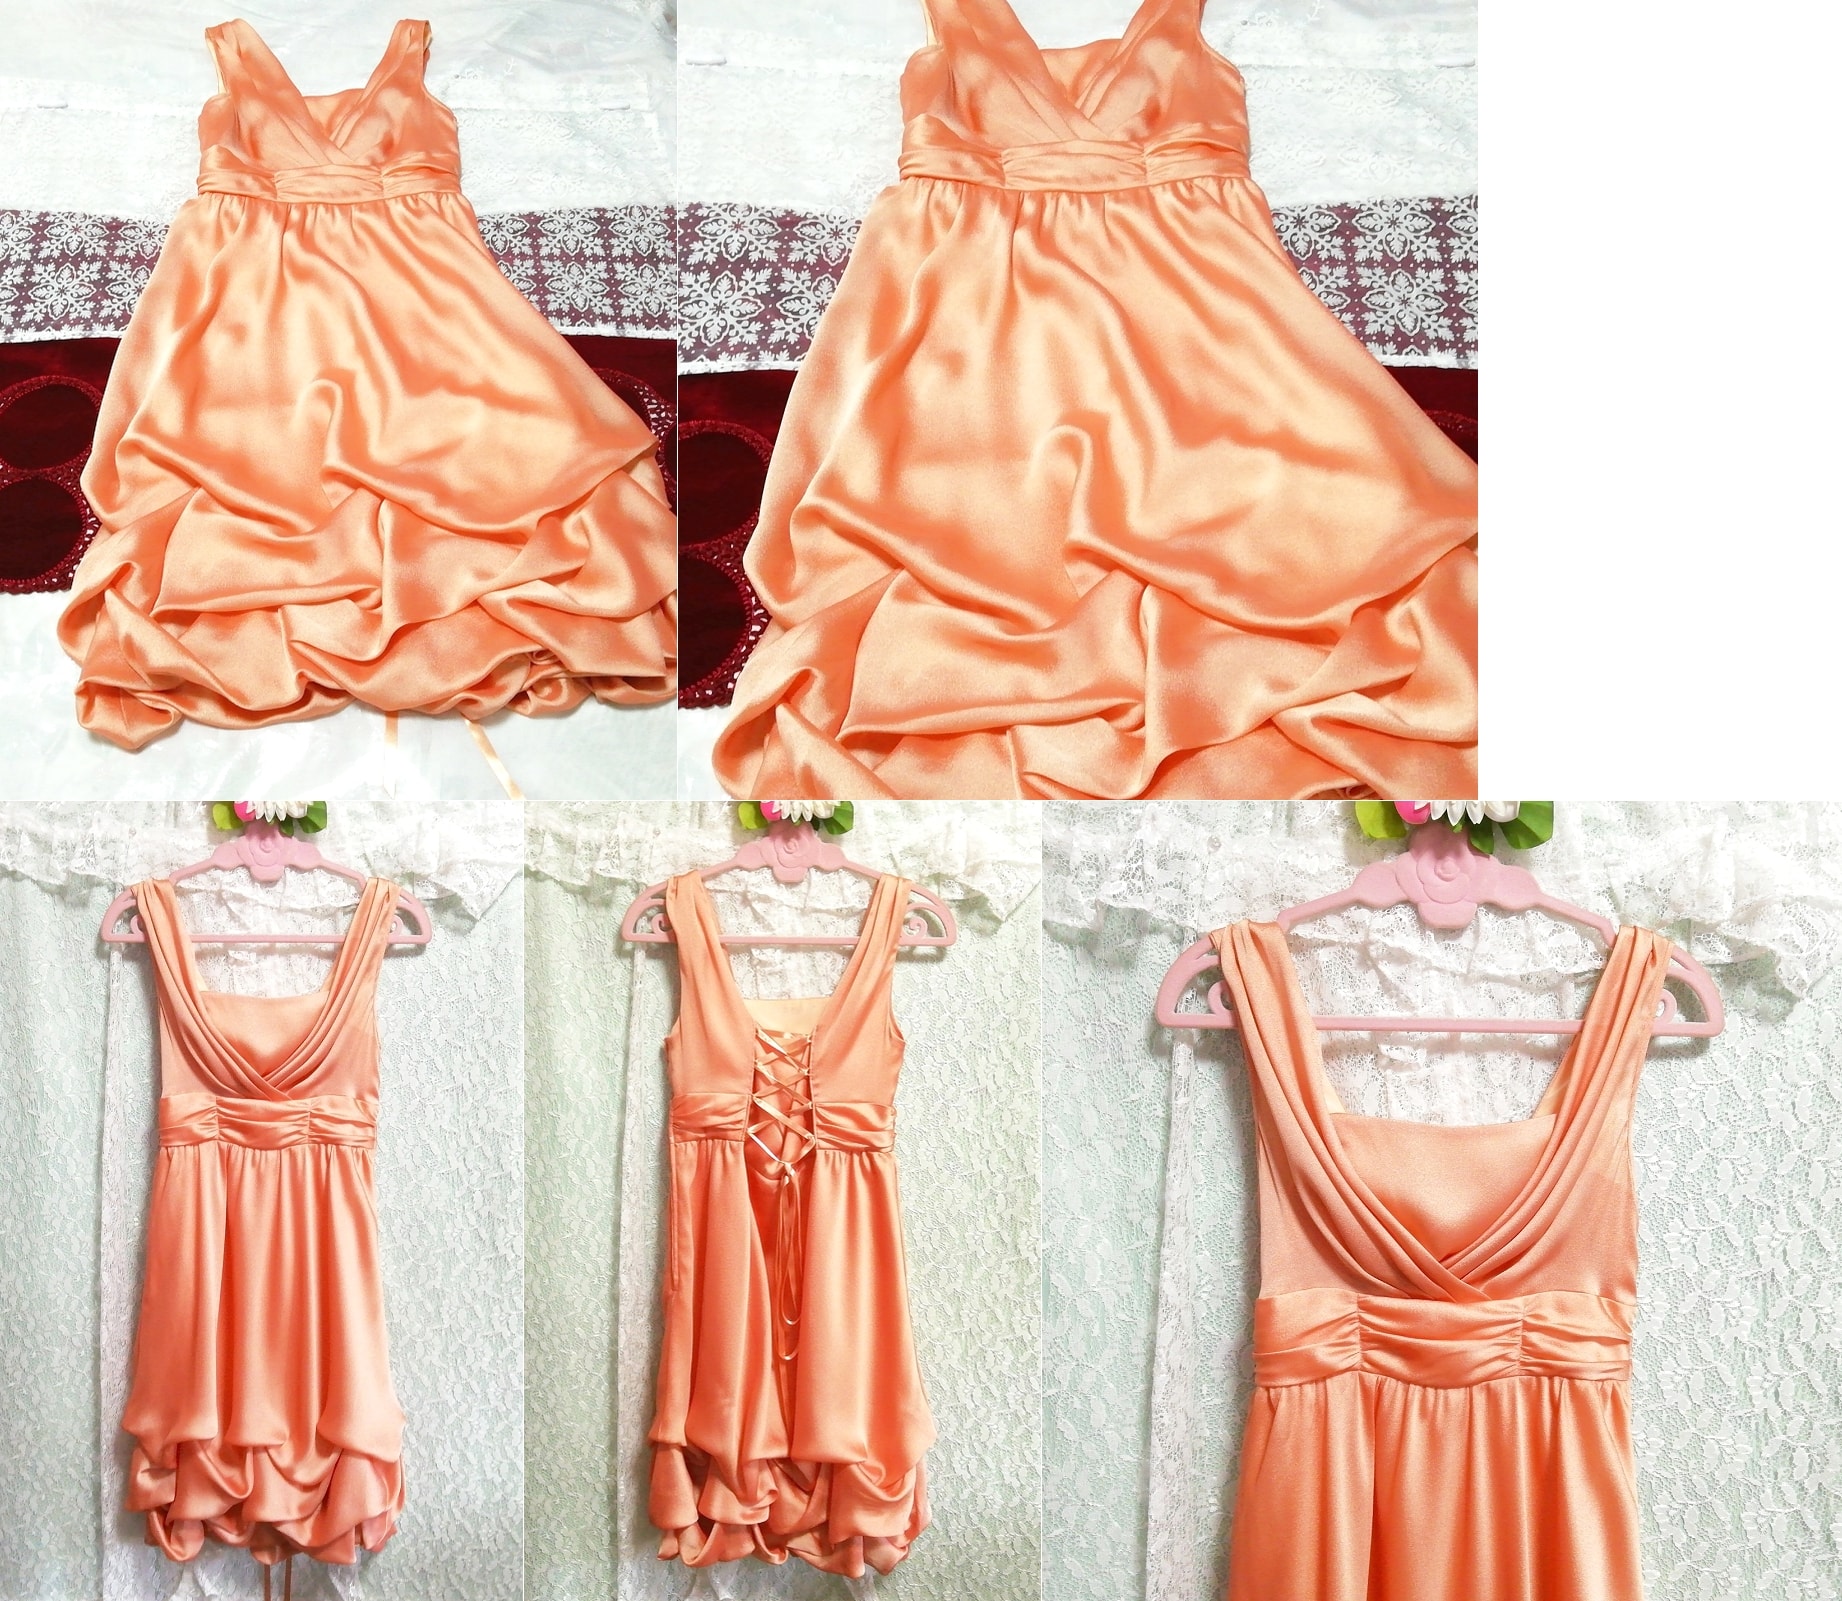 Orange satin chiffon negligee nightgown nightwear sleeveless dress, fashion, ladies' fashion, nightwear, pajamas